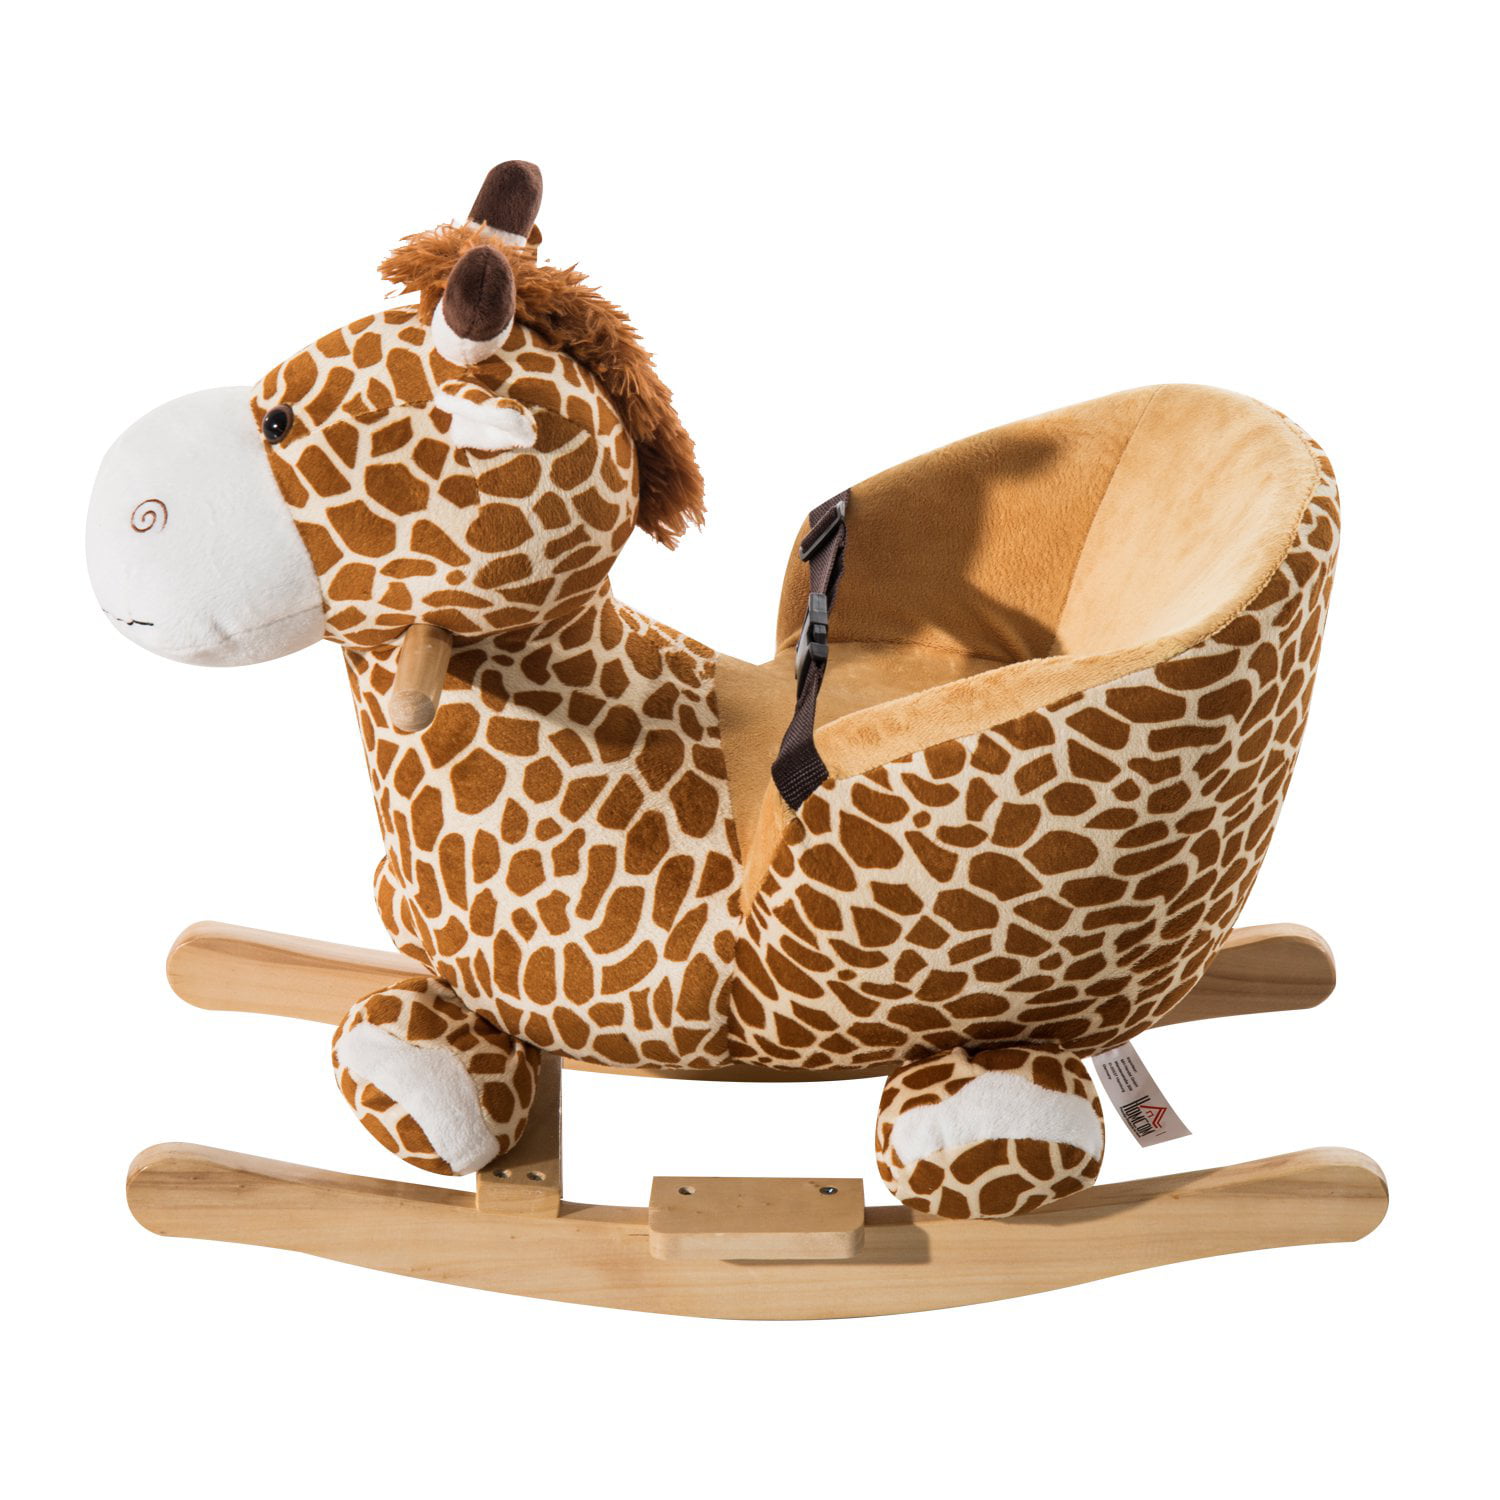 Kids infants Rocking Musical Multicolour Giraffe Rocking Chair Fun Activity Toy 